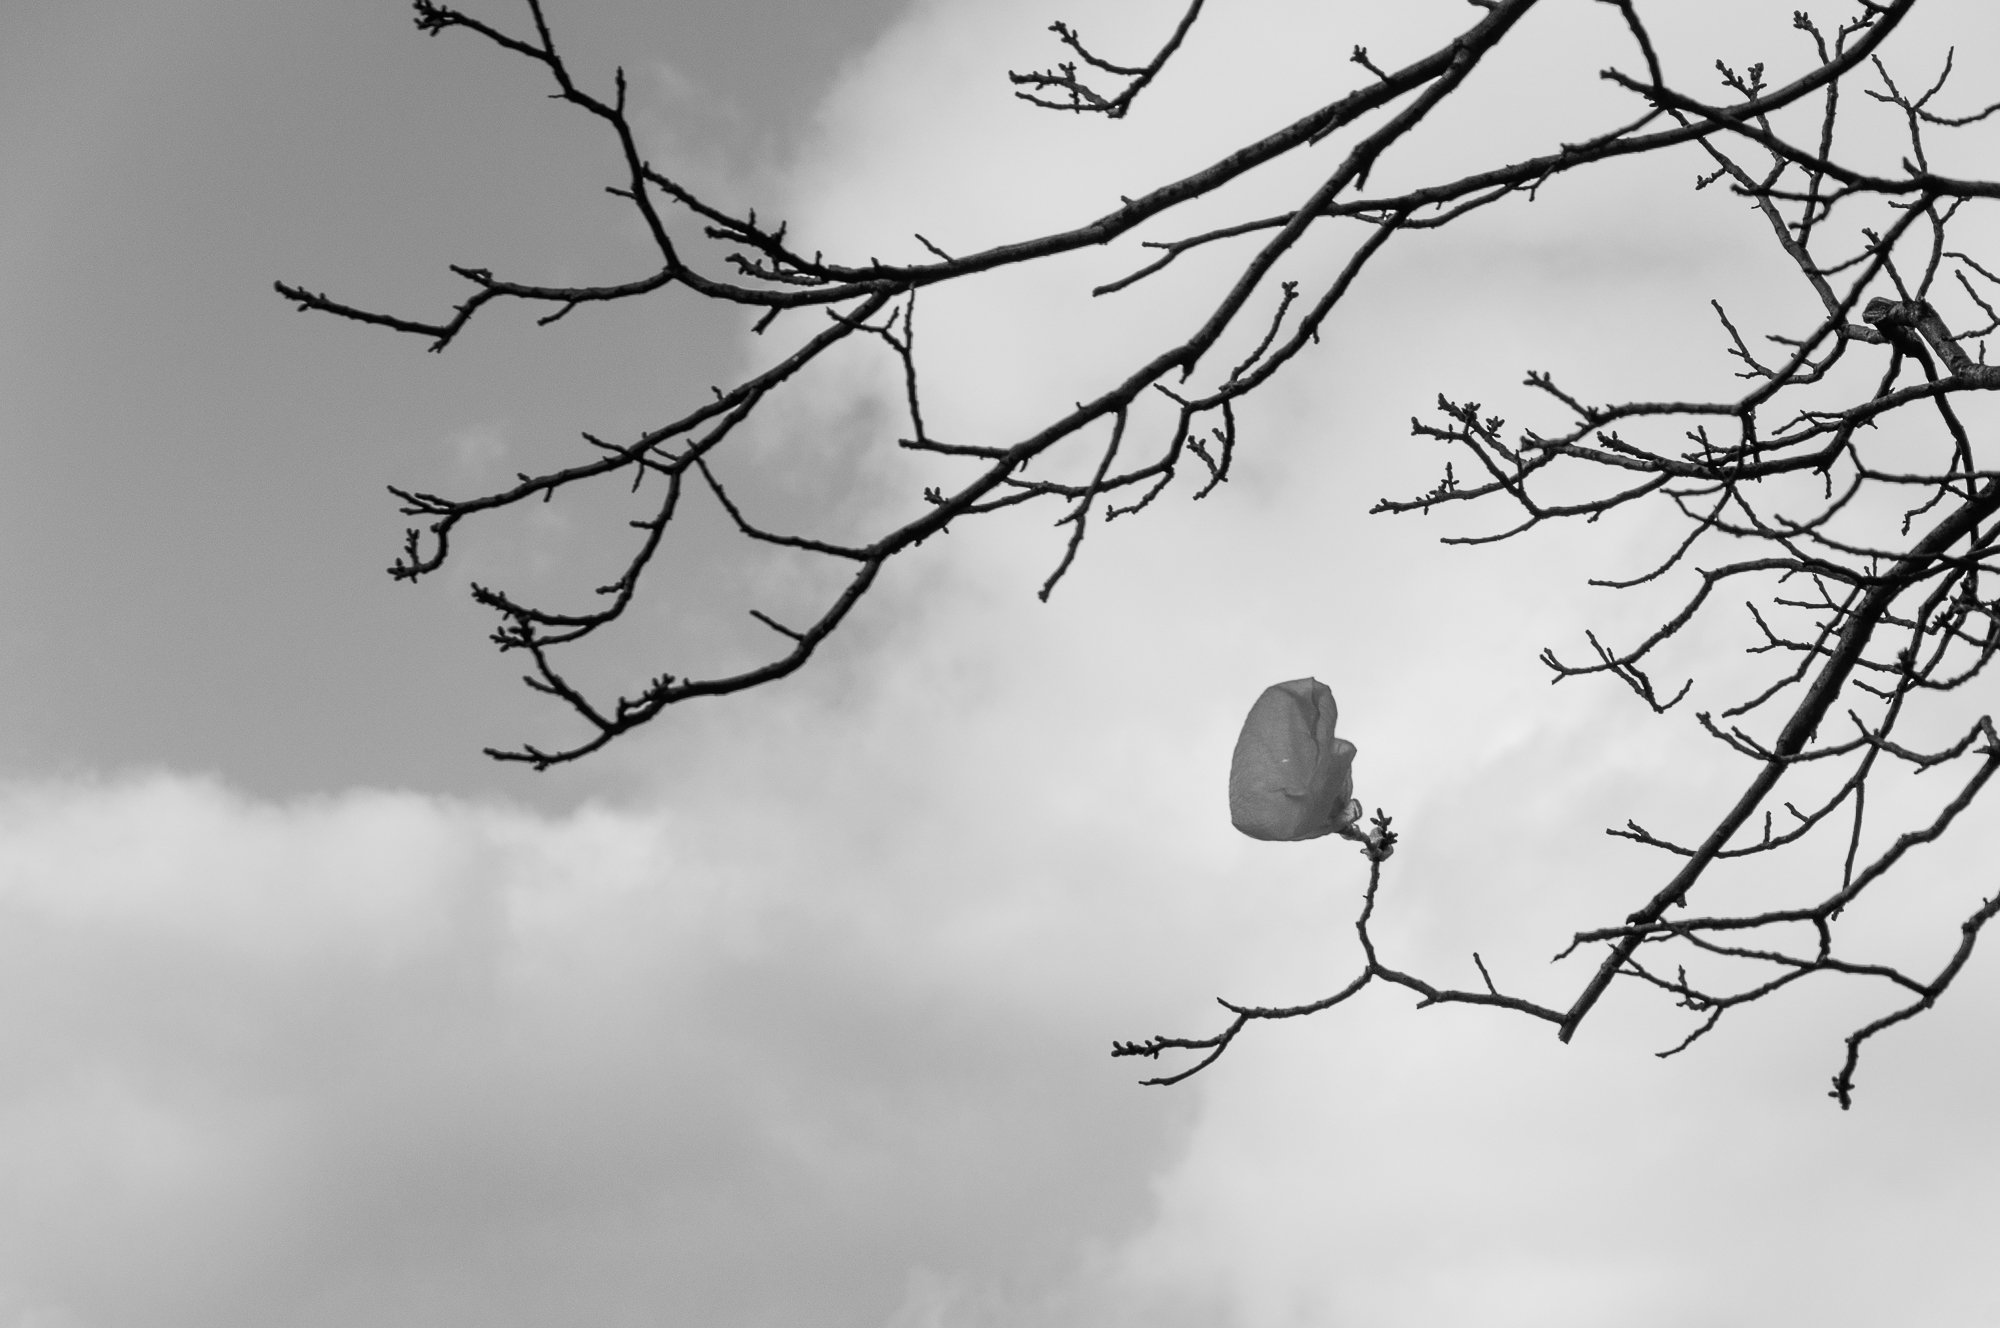 Adam Mazek Photography Warsaw (Warszawa) 2020. Post: "Enthusiasm." Minimalism. Garbage on the tree.